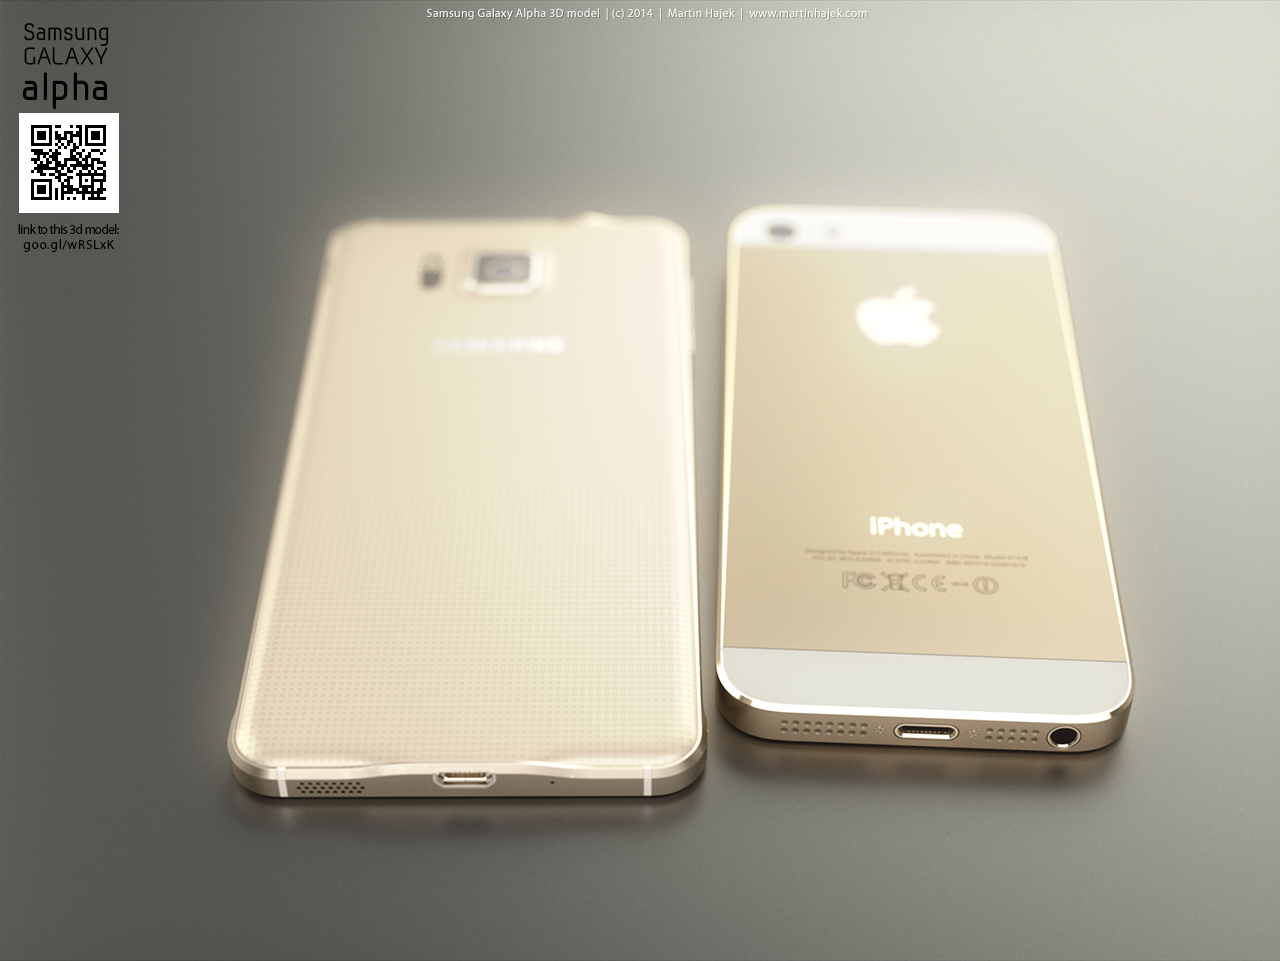 Galaxy Alpha vs. iPhone 5/6